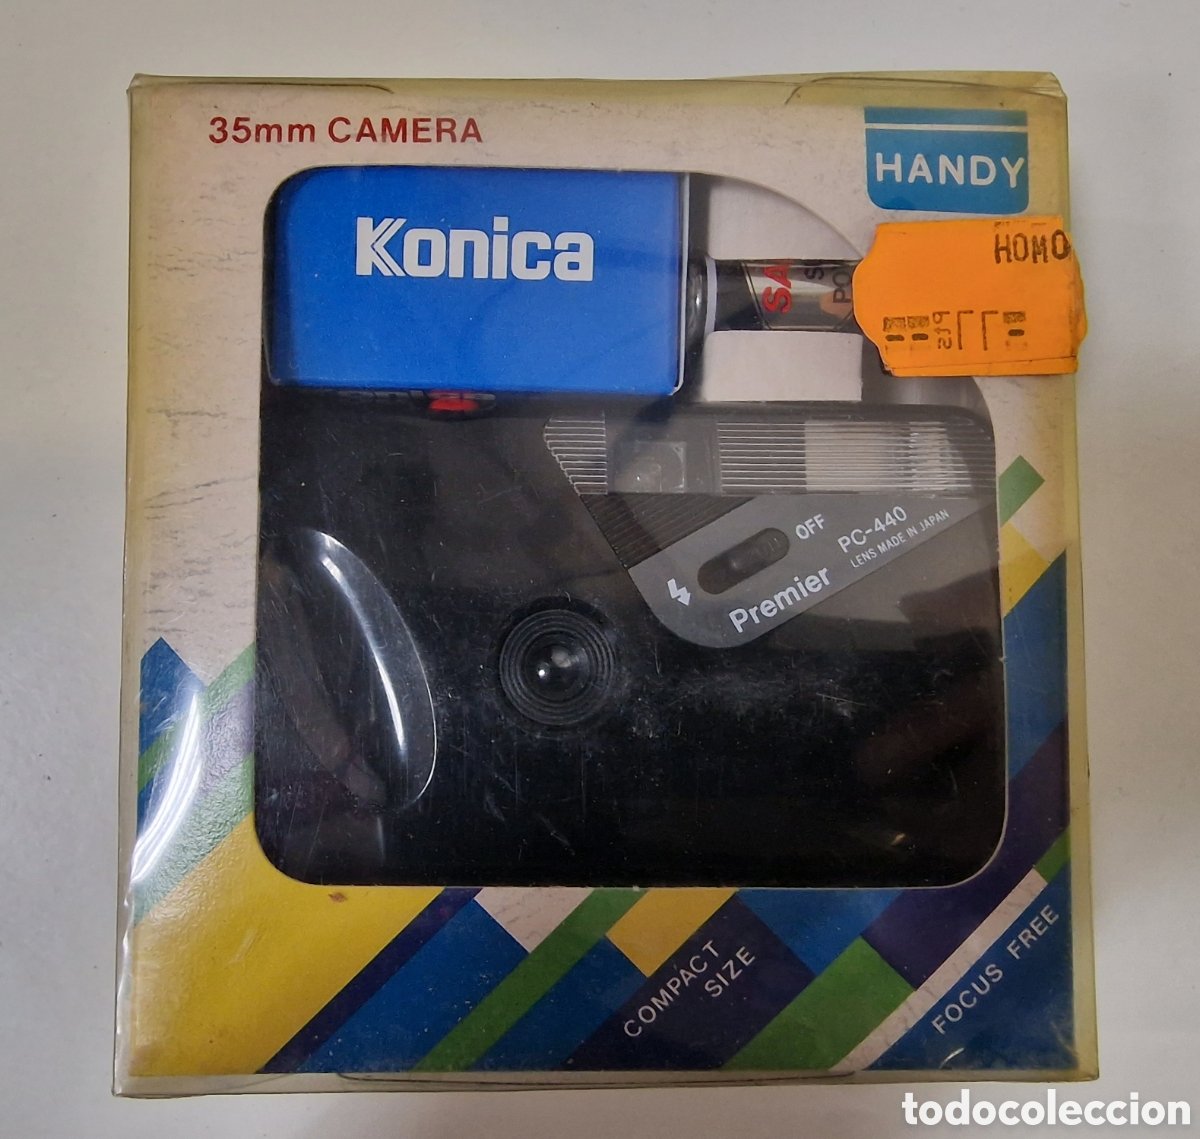 rara cámara analógica compacta toma m-616 - Compra venta en todocoleccion